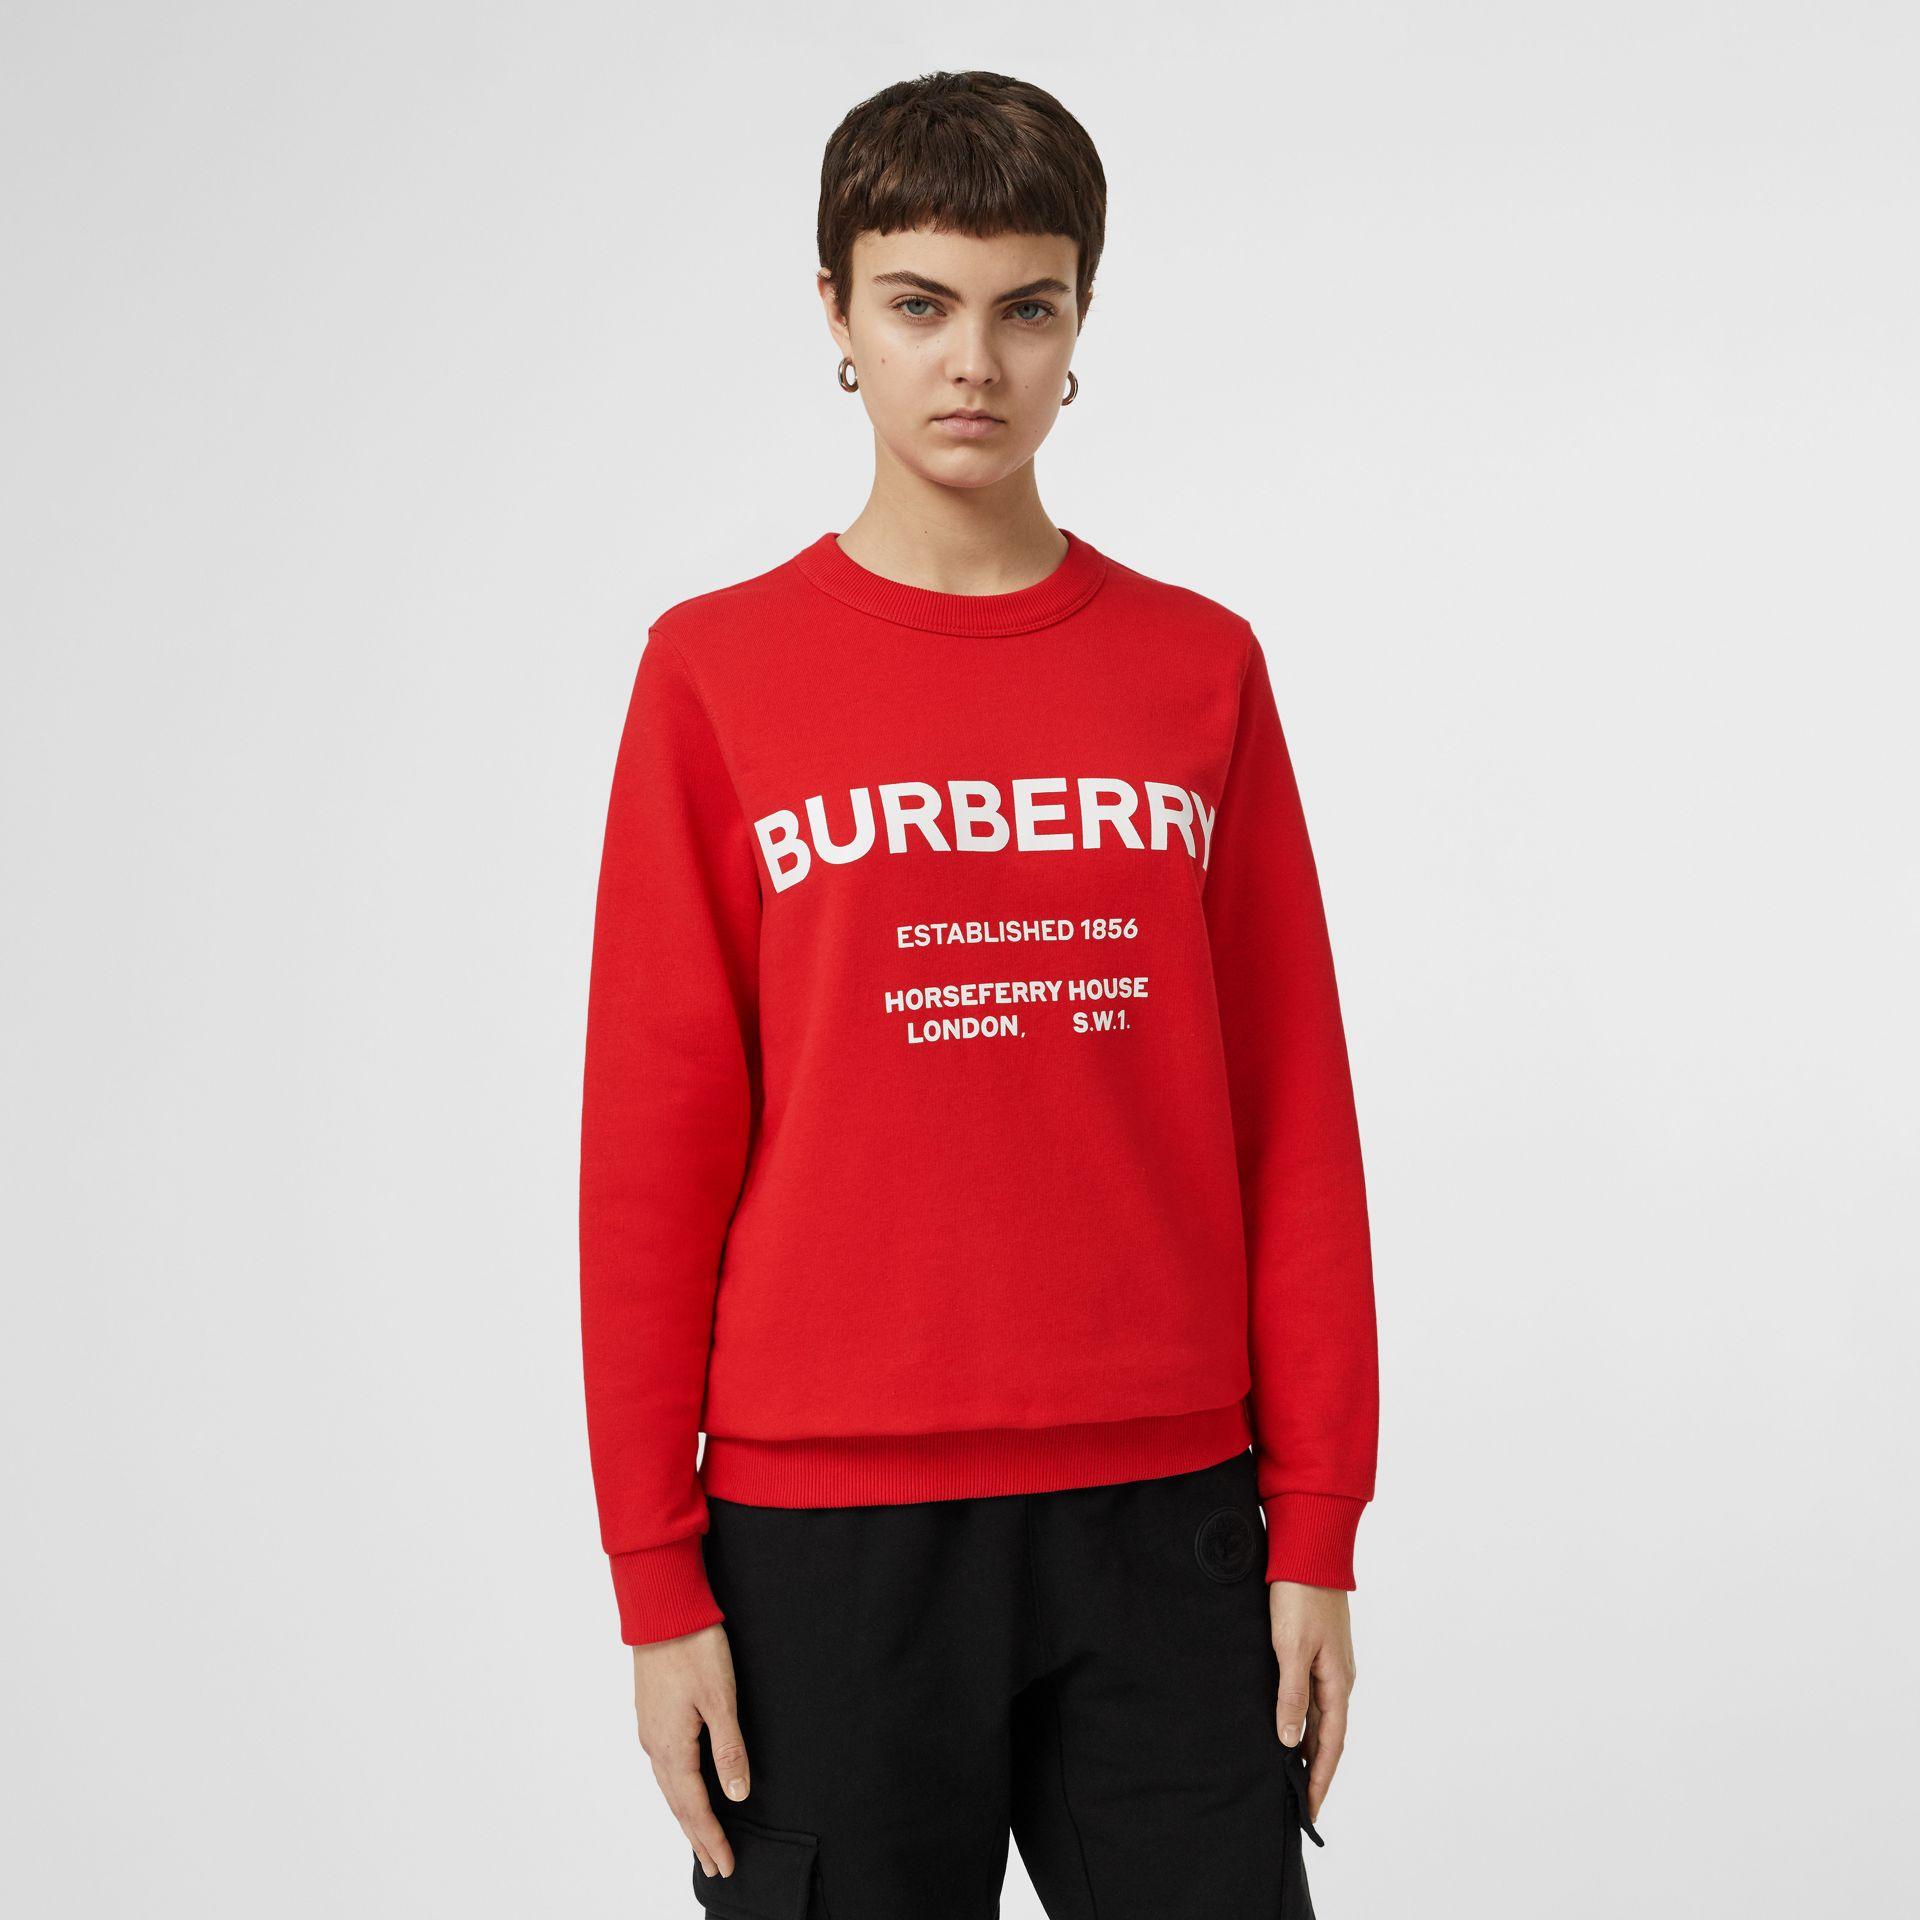 Burberry Established 1856 Sweatshirt Outlet, 52% OFF | www.osana.care